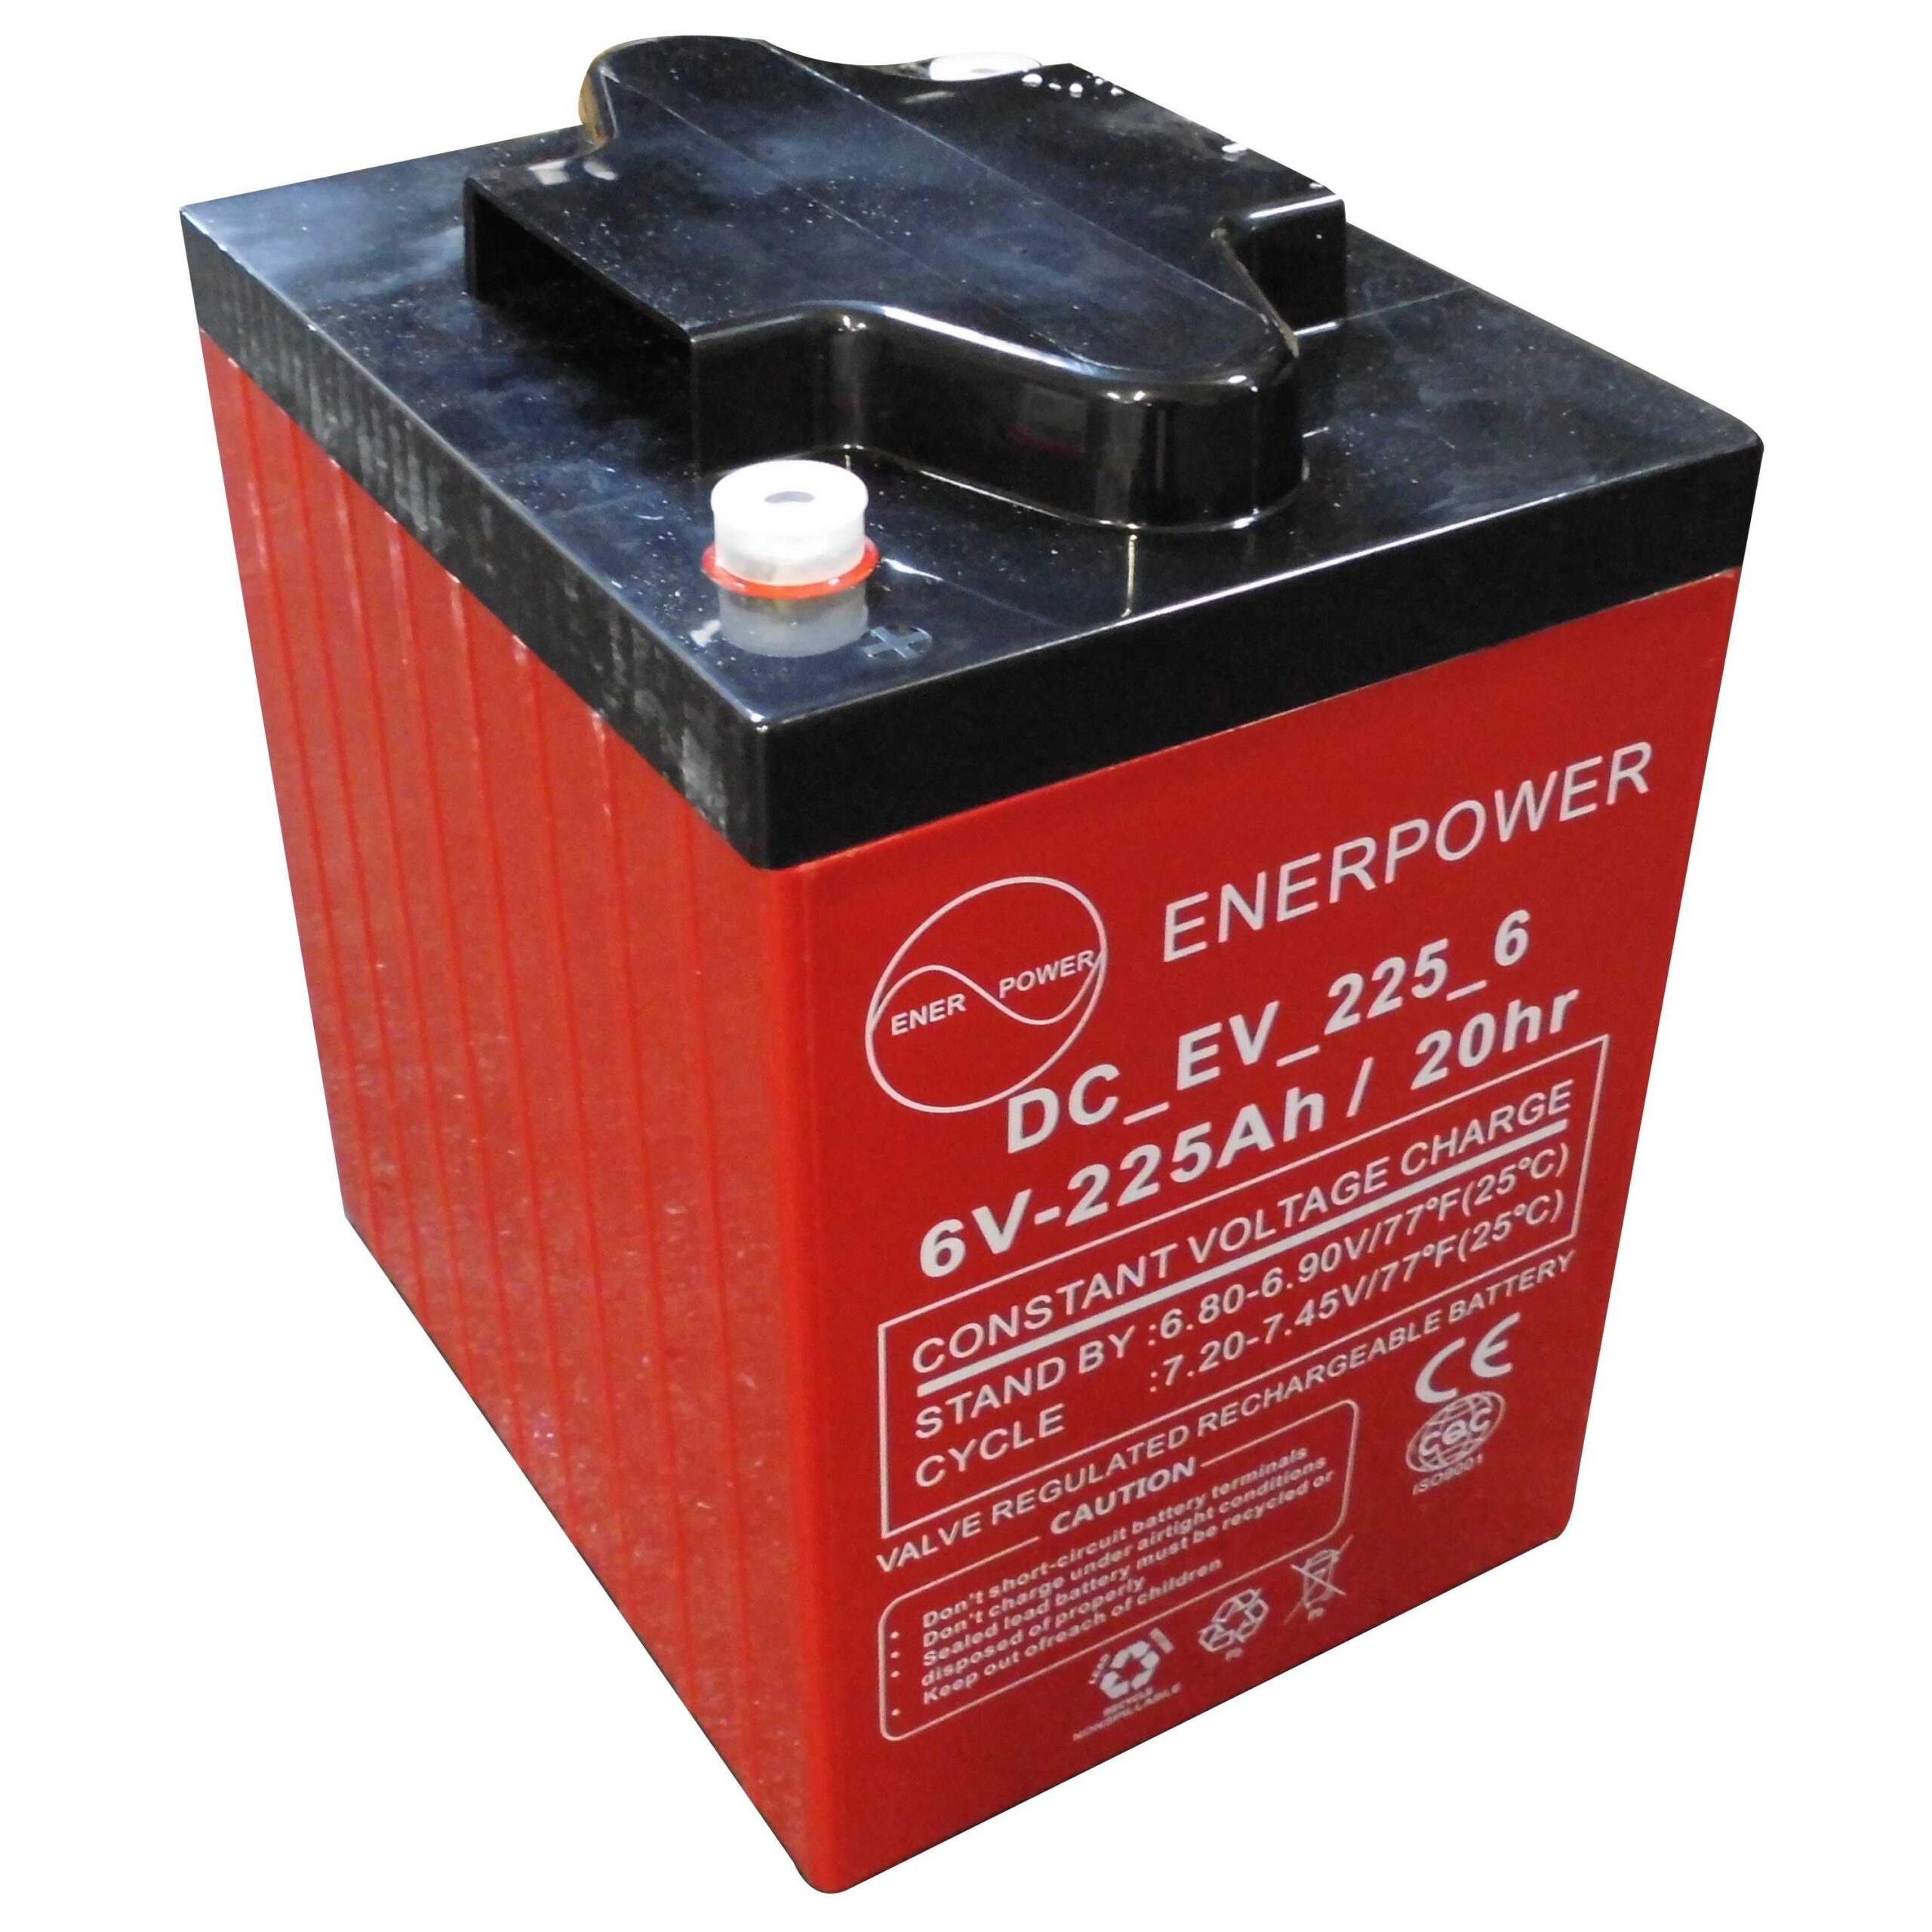 DCEV225-6 6 V 225 Ah zyklenfeste ENERPOWER-Batterie